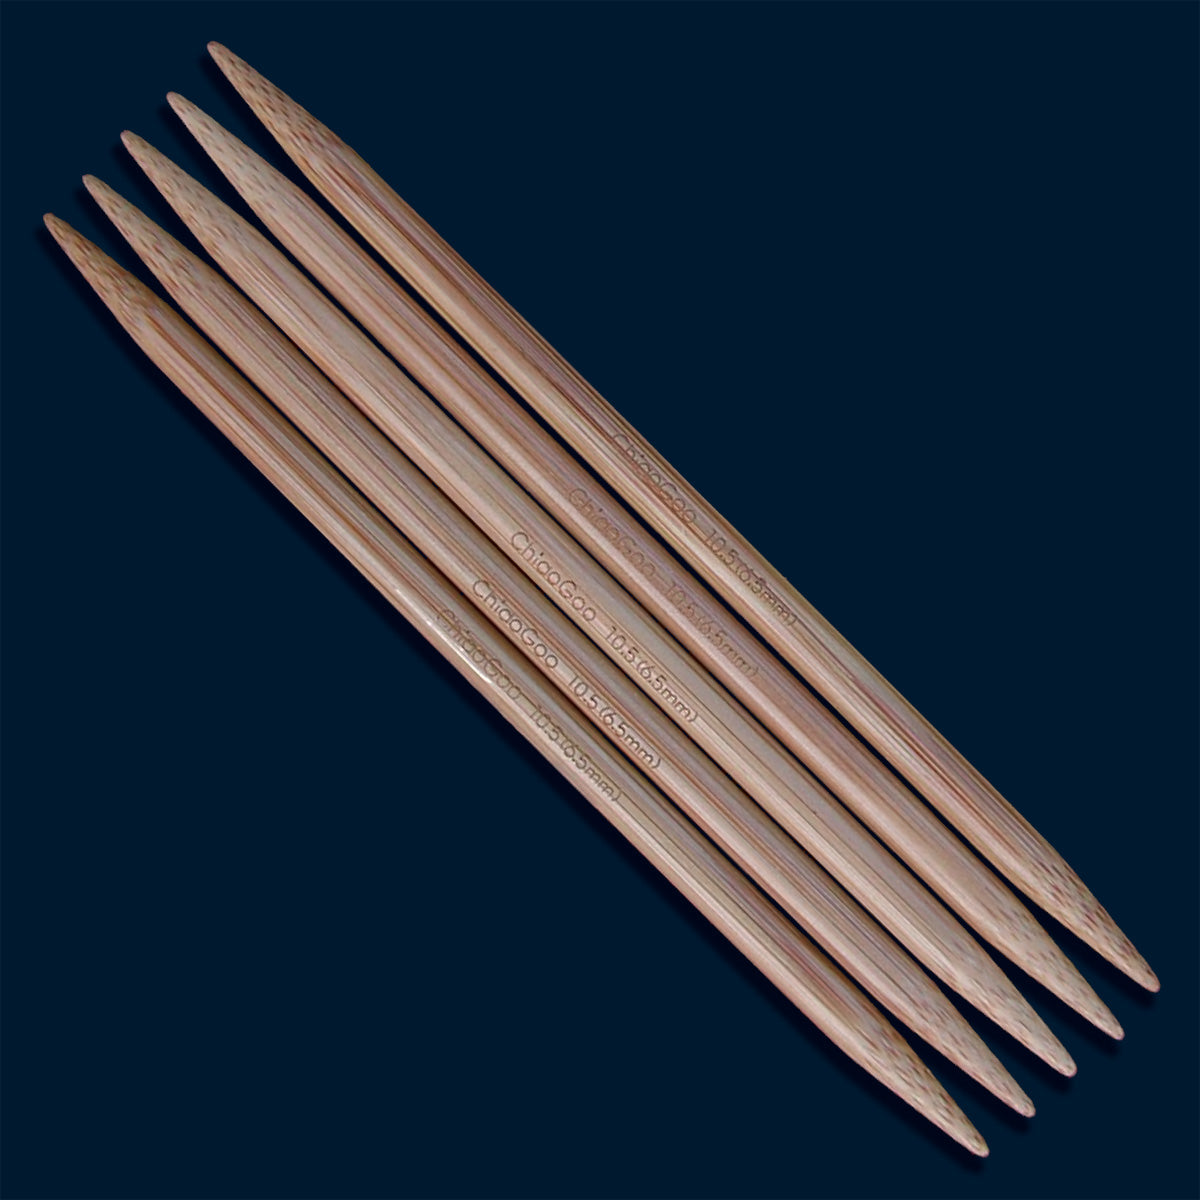 ChiaoGoo (6 Inch / US Sizes 1 - 15) Bamboo Double Point Knitting Needles